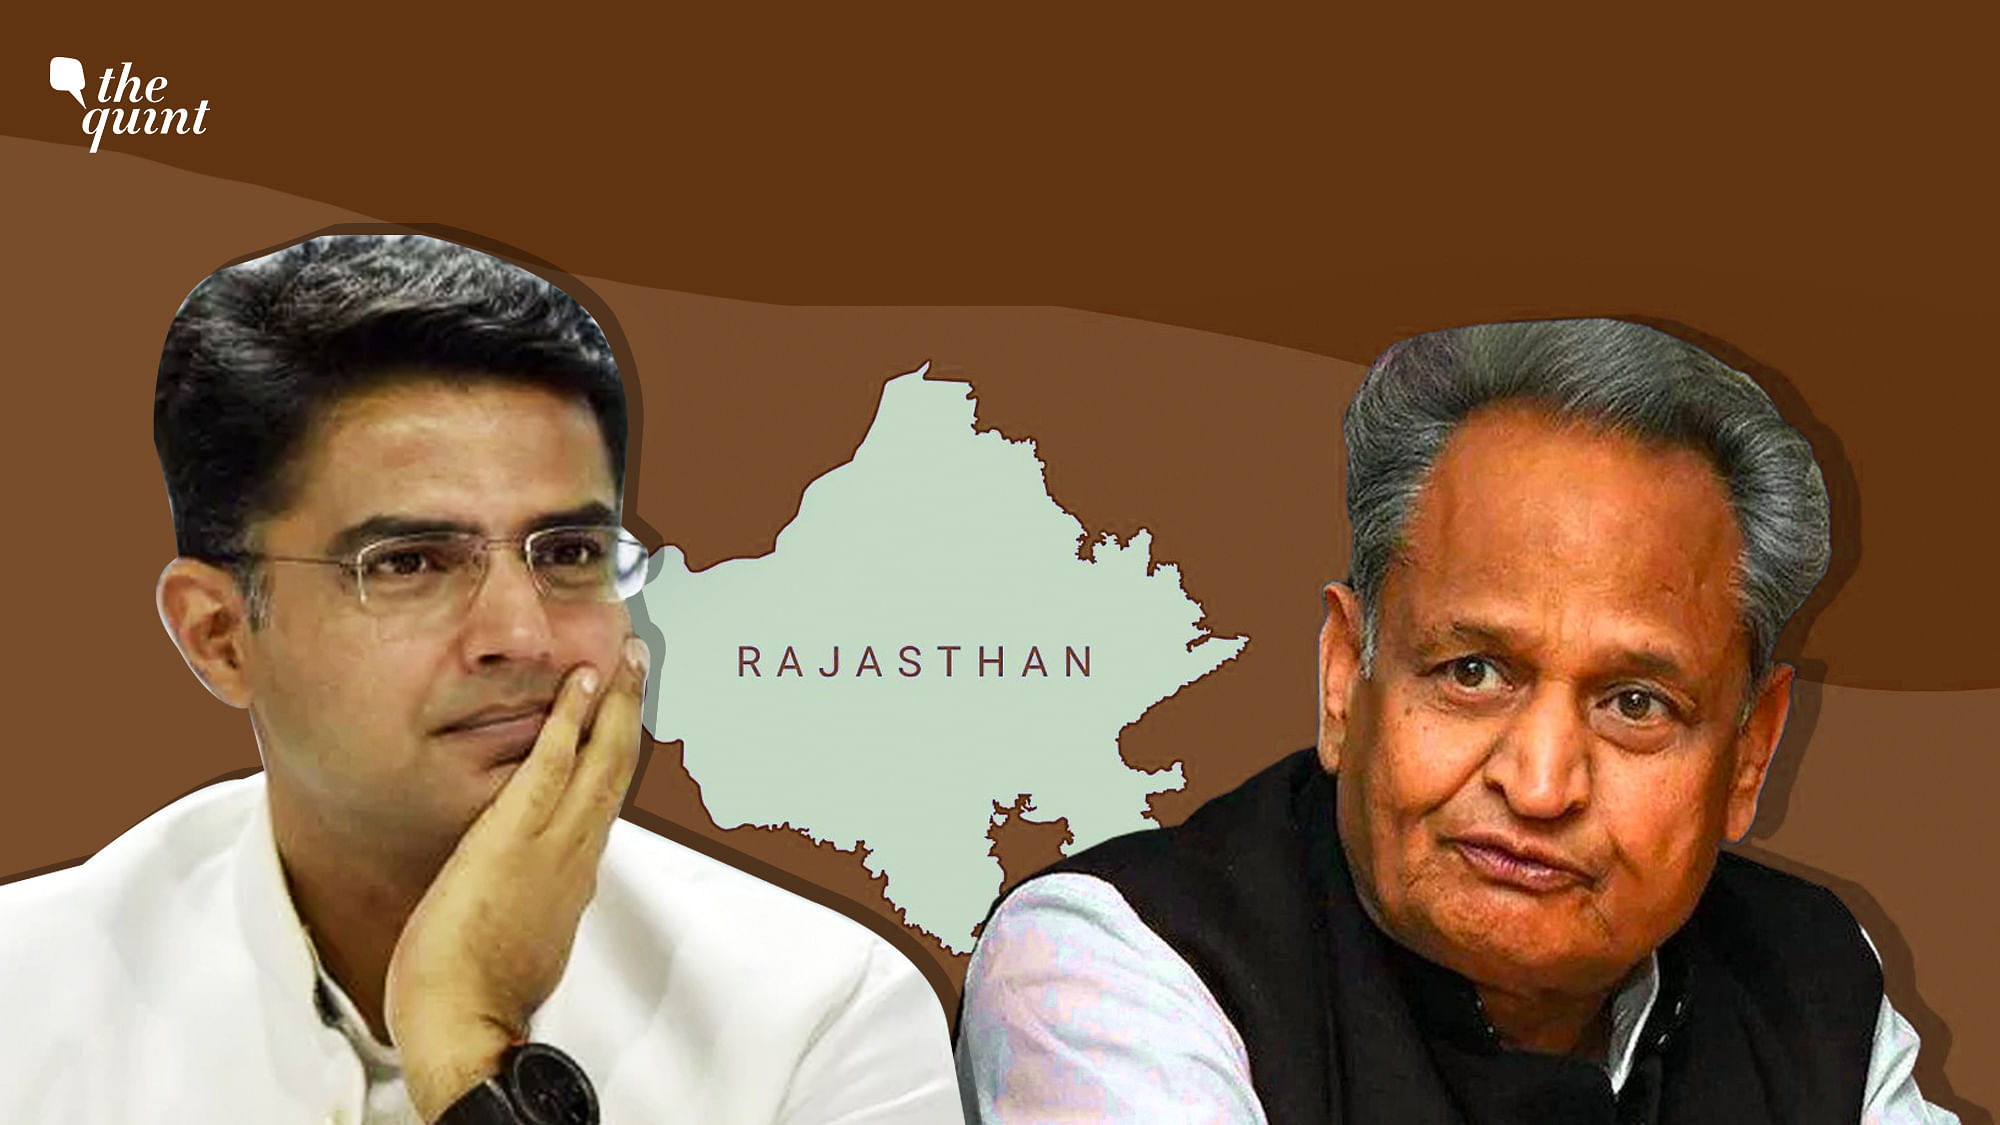 <div class="paragraphs"><p>Rajasthan CM Ashok Gehlot and Congress leader Sachin Pilot. Image used for representative purposes.</p></div>